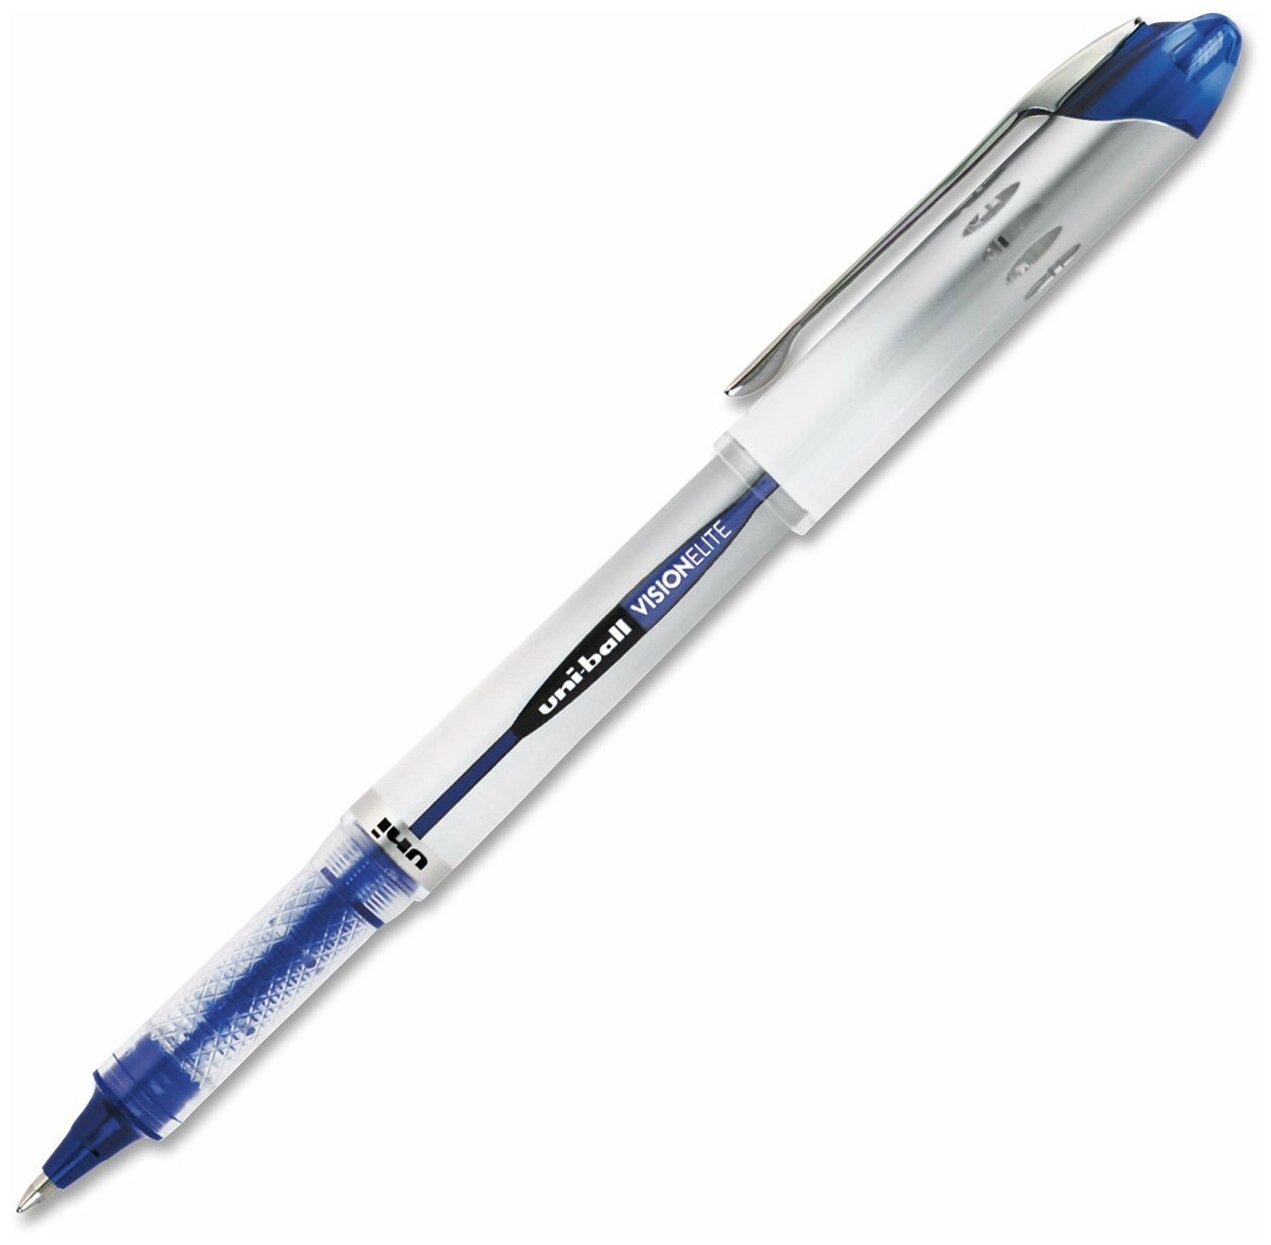 Uni Mitsubishi Pencil Ручка-роллер Uni-Ball Vision Elite, 0.8 мм (UB-200 (08)), UB-200(08)BLUE, синий цвет чернил, 1 шт.